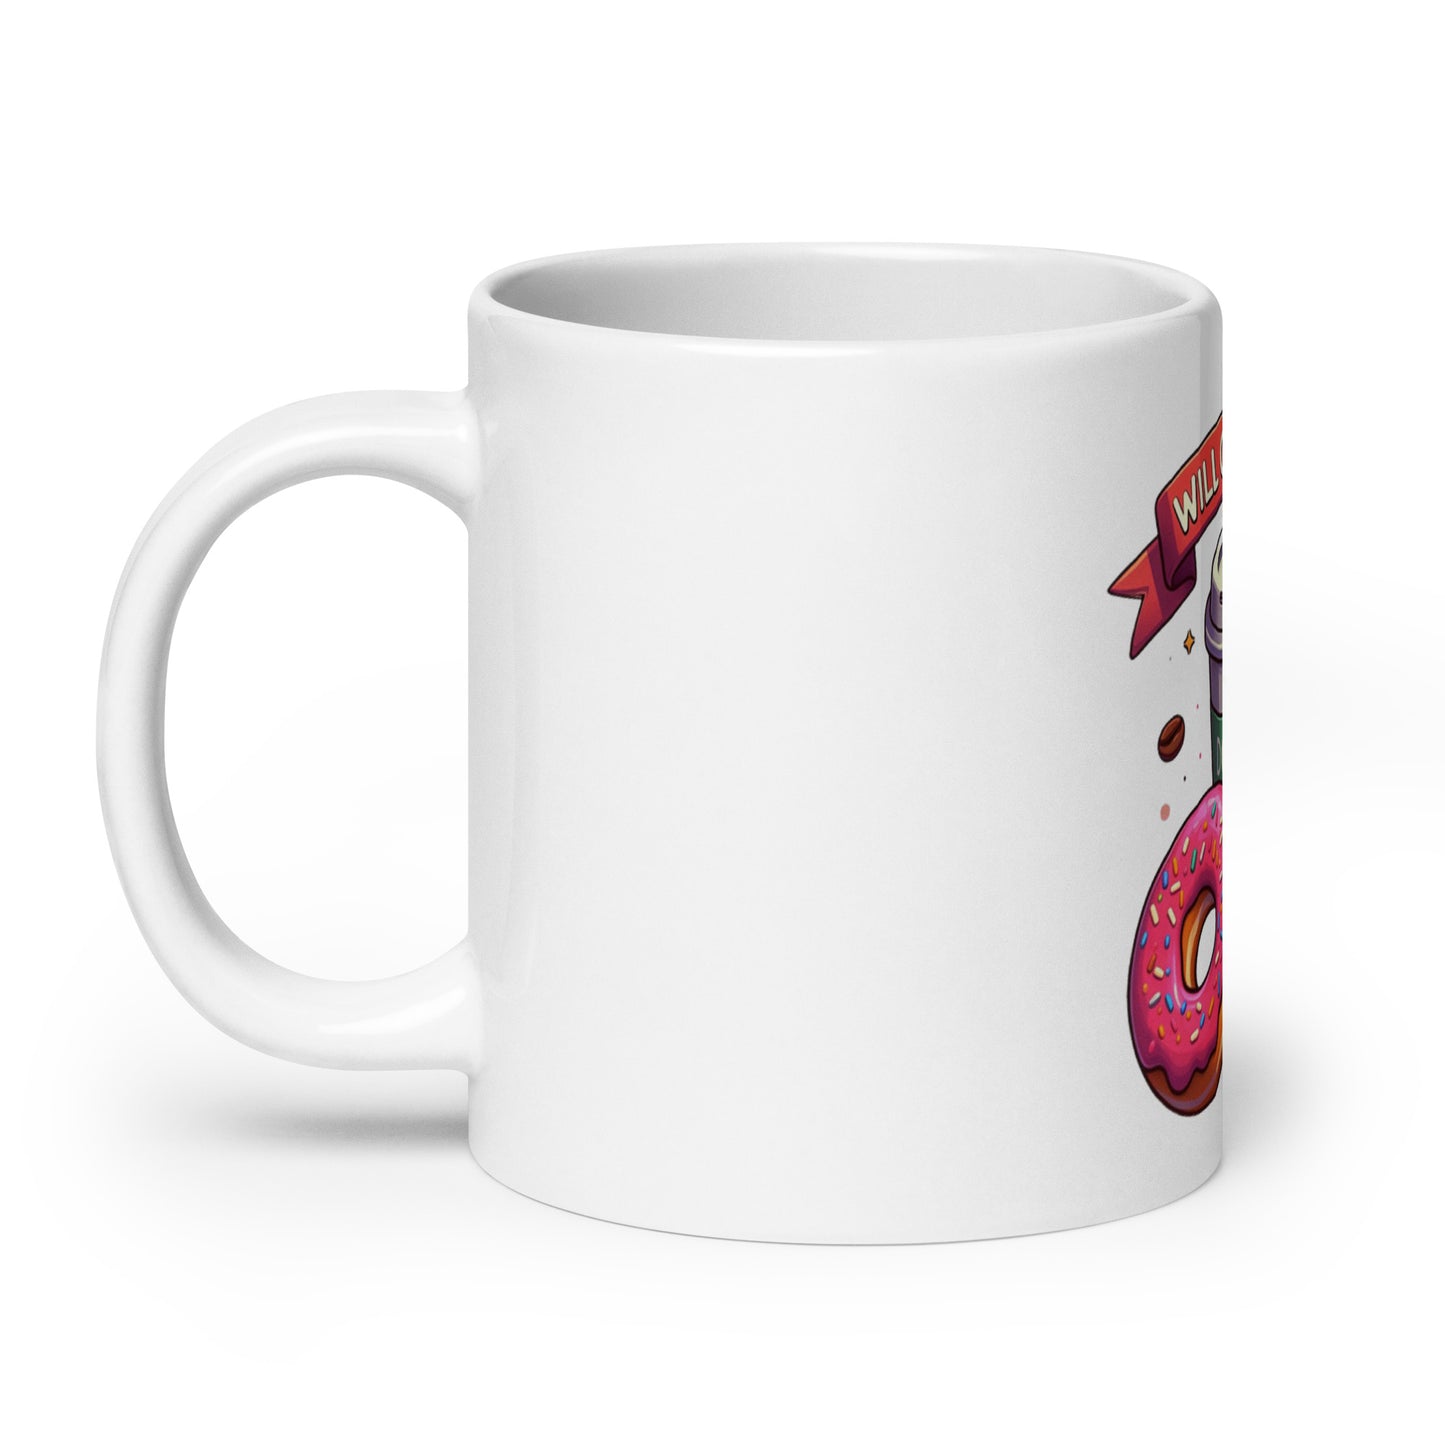 Code for Coffee mug